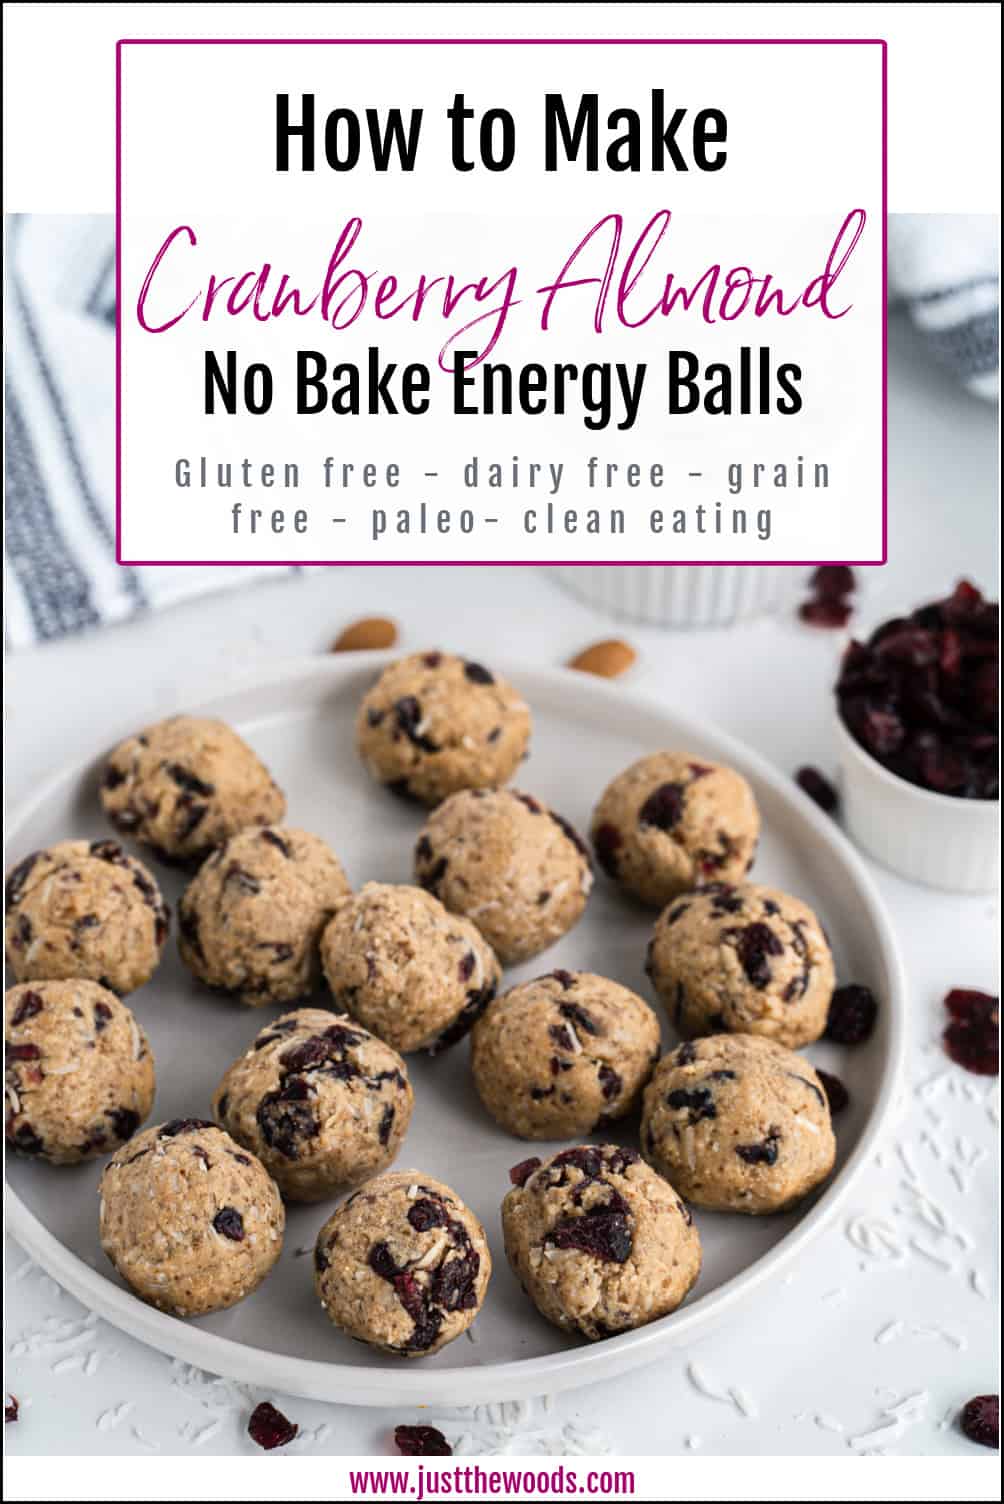 how to make cranberry almond no bake energy balls, gluten free, dairy free, grain free, paleo, vegan, clean eating